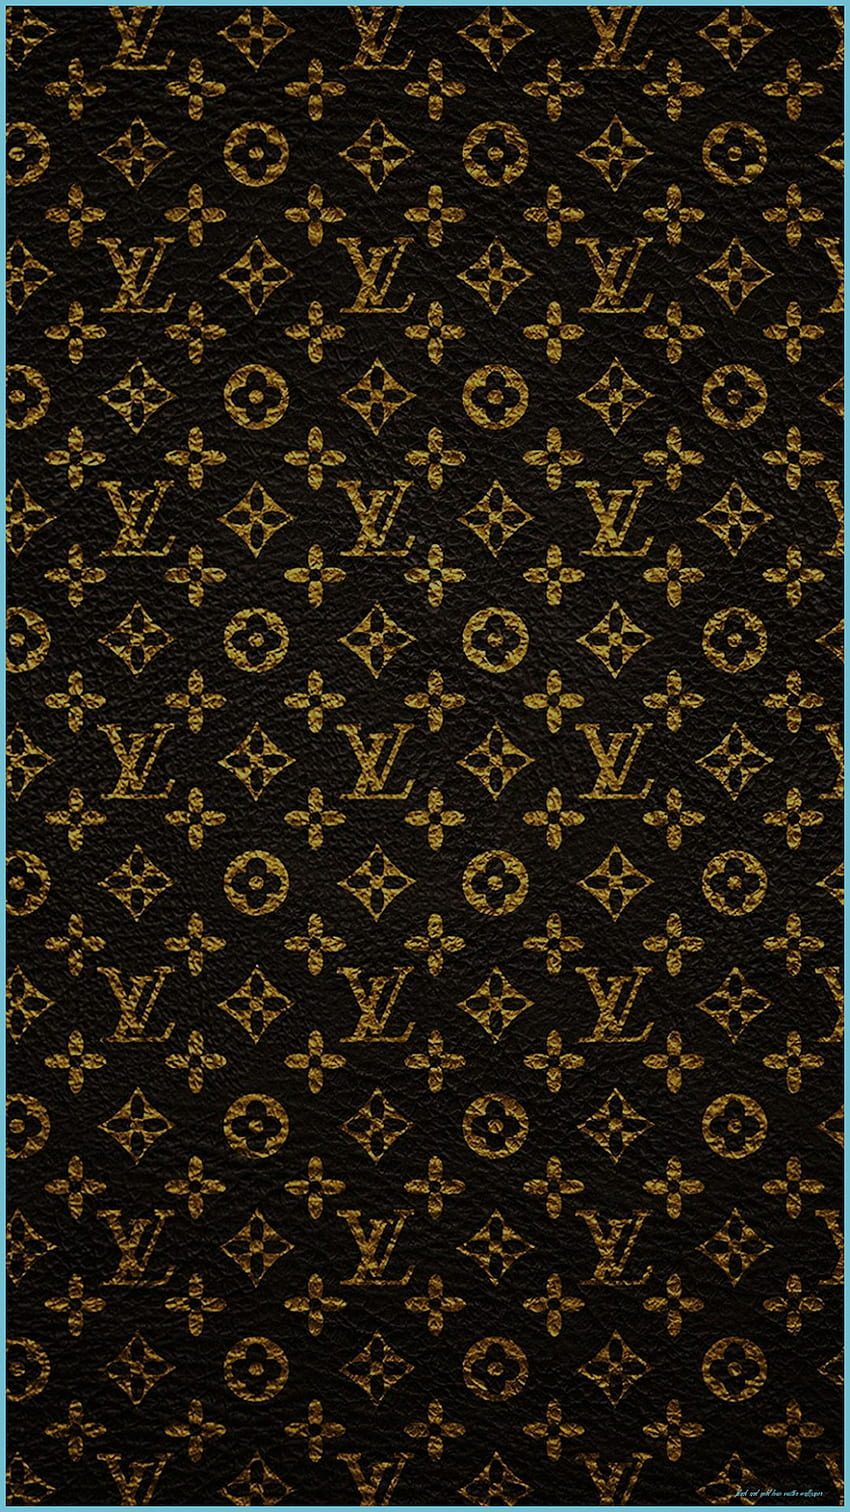 Black and White Louis Vuitton Monogram - Luxurydotcom - iTunes app photo  Louis  vuitton iphone wallpaper, White louis vuitton, Louis vuitton background